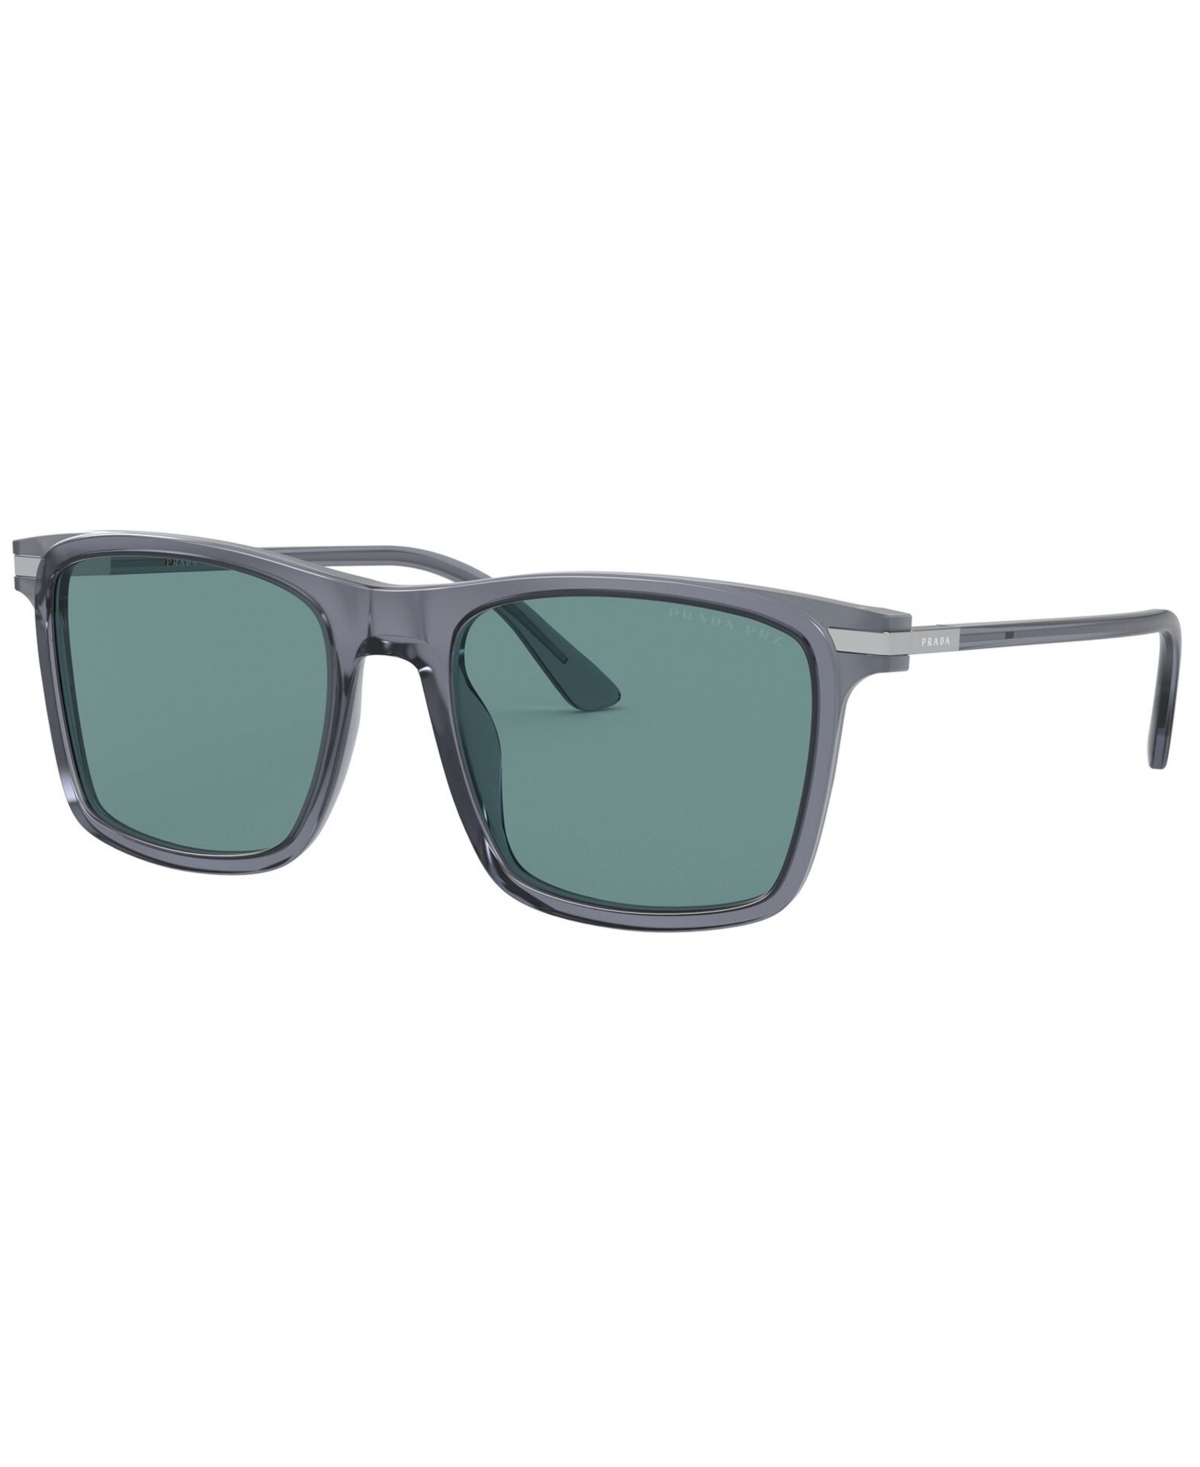 Prada Men's Polarized Sunglasses GREY/POLAR GREEN 0PR 19XS $218.50